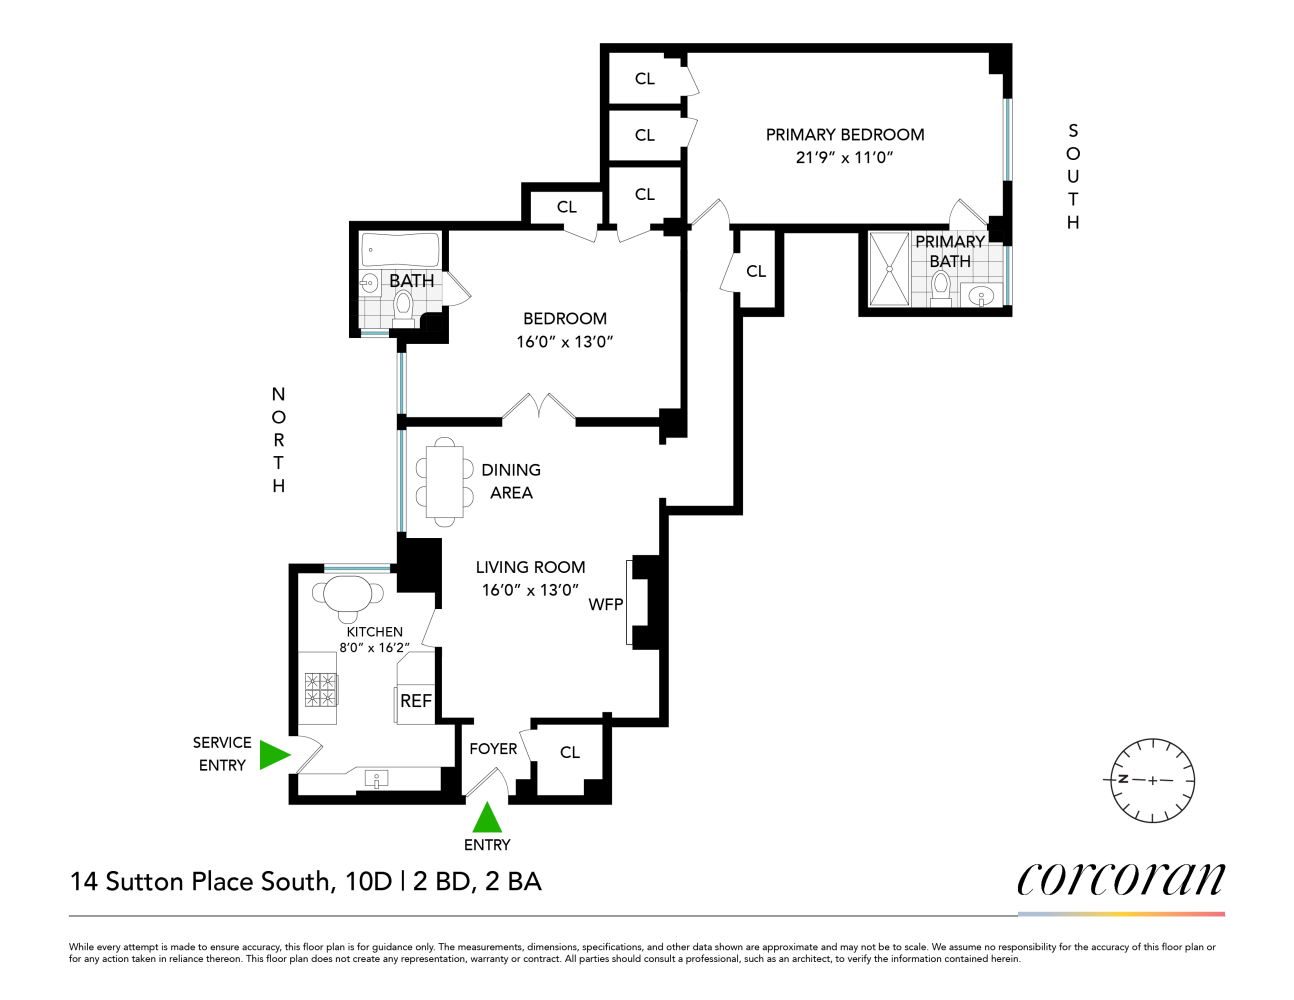 Floorplan for 14 Sutton Place, 10